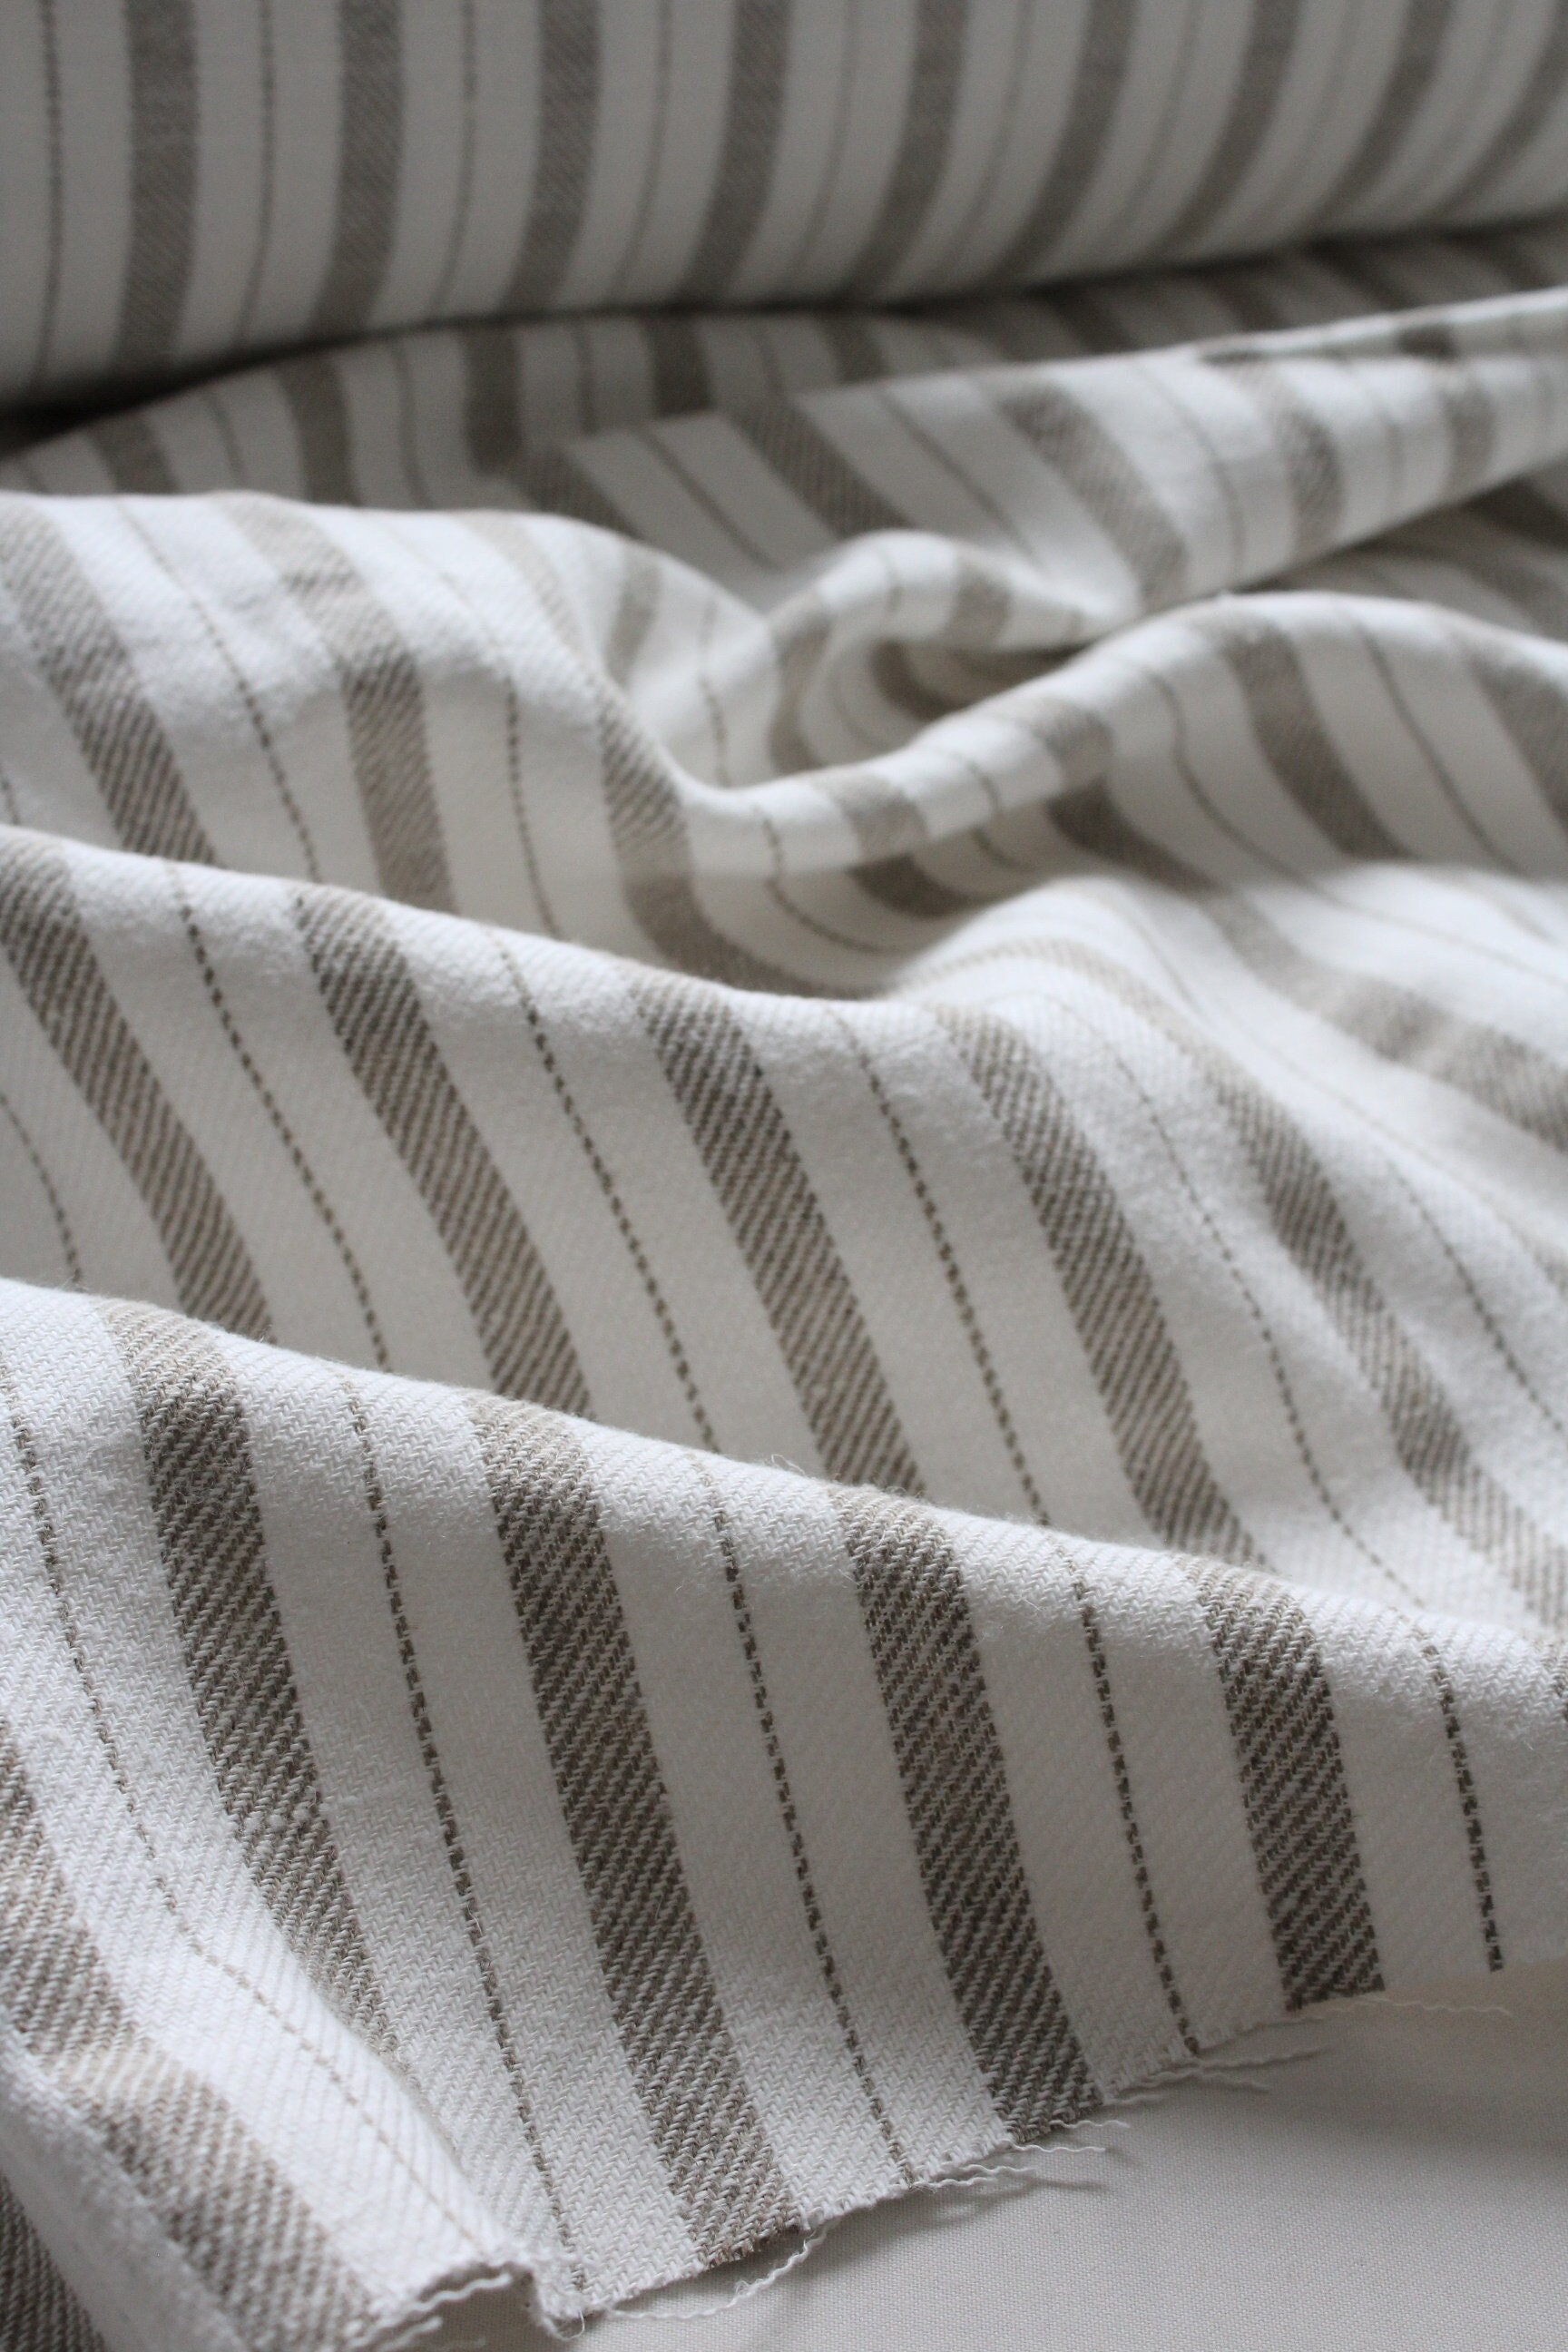 54 Dark Grey Stripe Ticking Fabric - Per Yard [DARKGREY-TICK] - $5.49 :  , Burlap for Wedding and Special Events